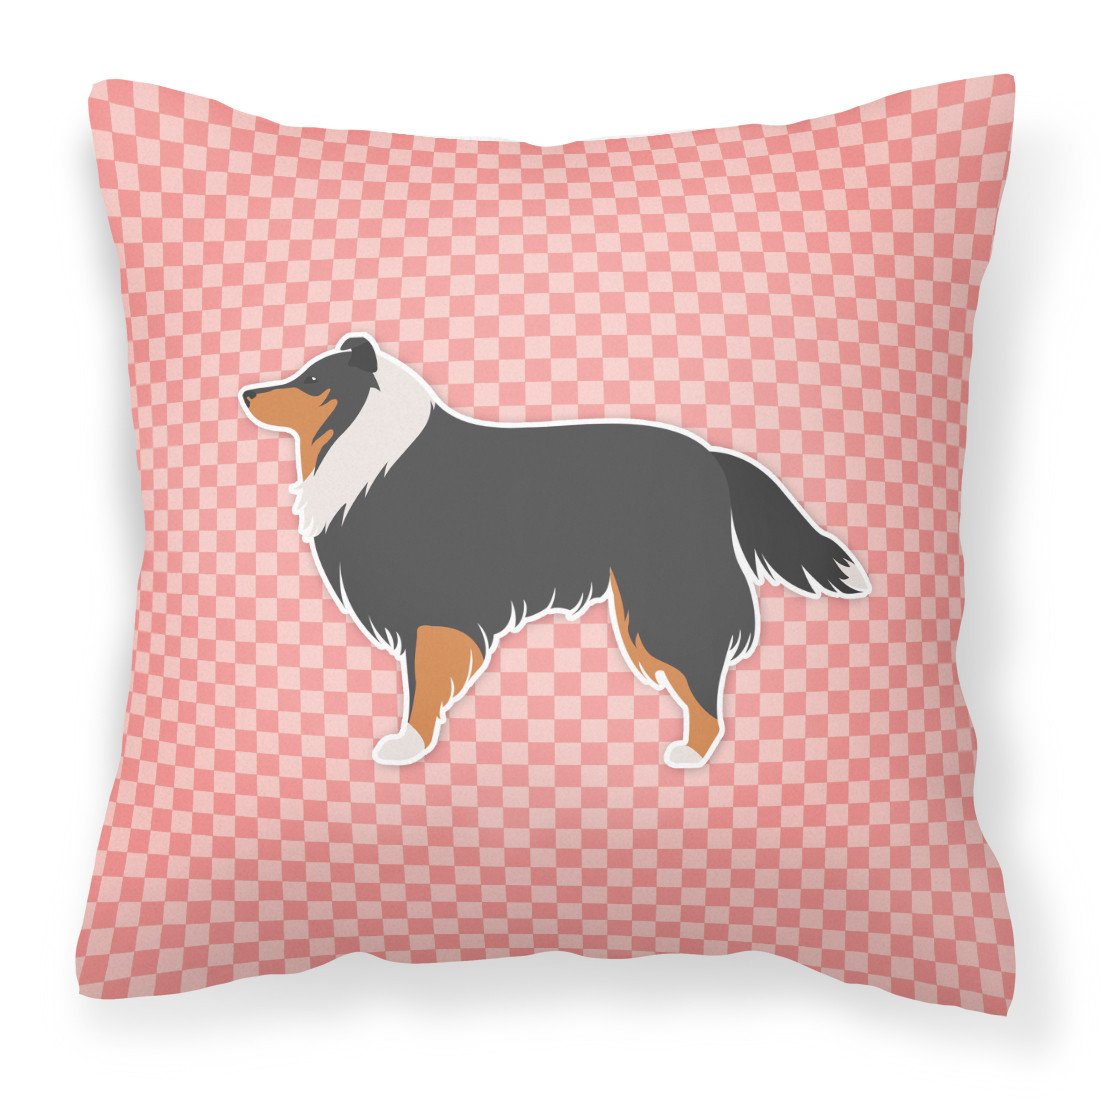 Sheltie/Shetland Sheepdog Checkerboard Pink Fabric Decorative Pillow BB3630PW1818 by Caroline's Treasures